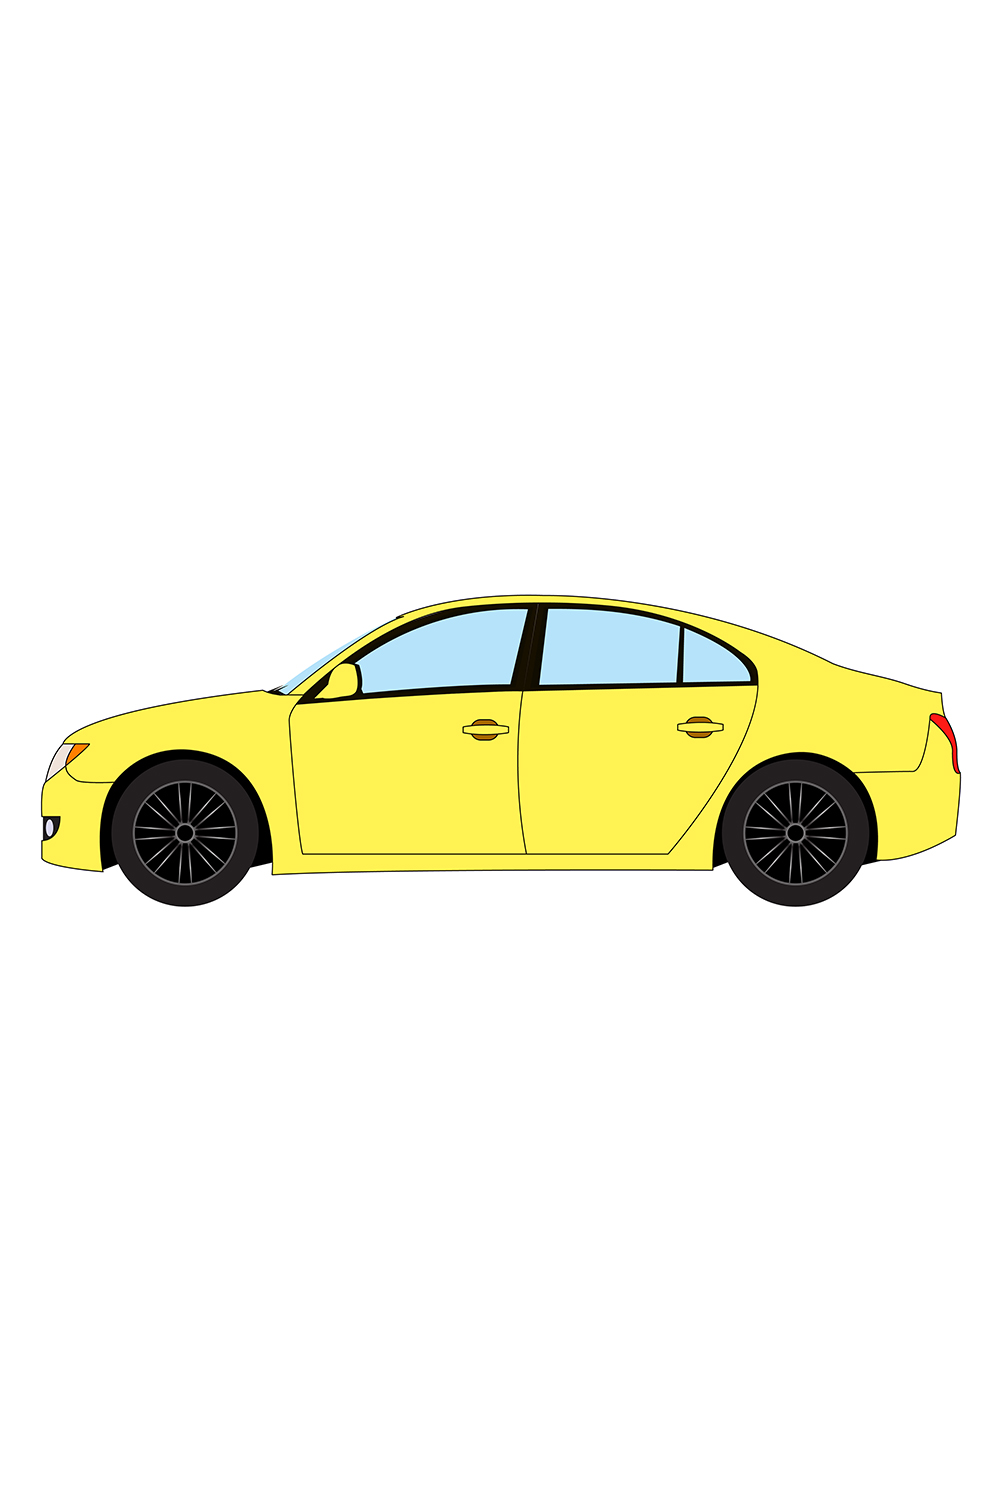 Modern car taxi vector pinterest preview image.